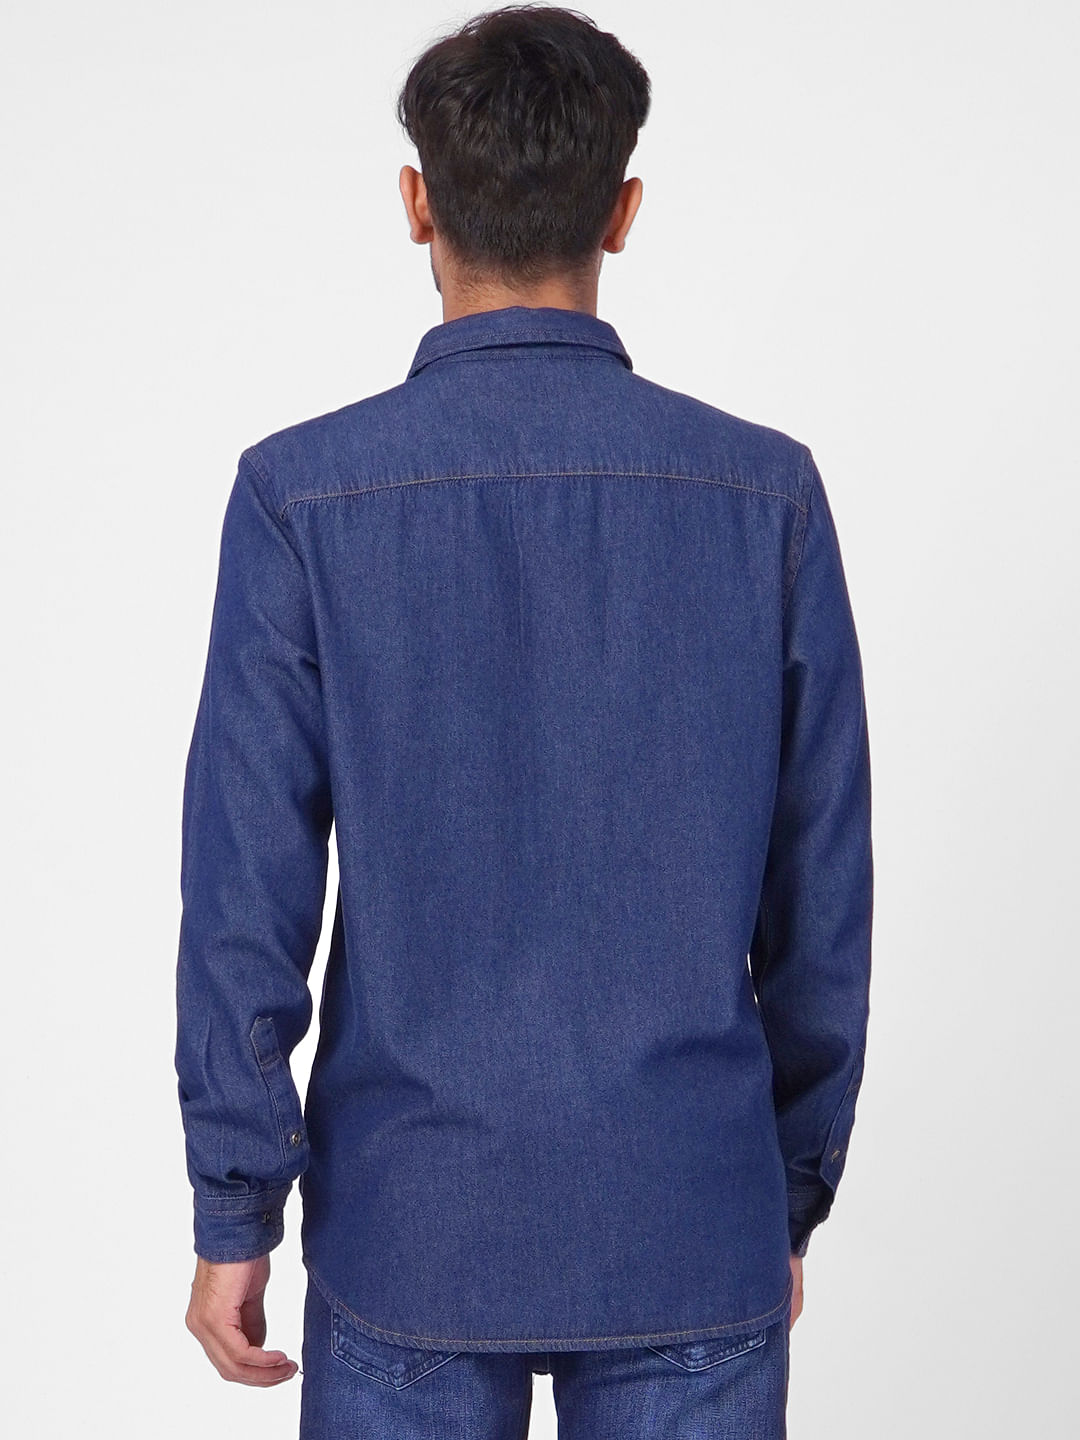 Buy Women Blue Textured Long Sleeves Shirt Online - 811720 | Allen Solly